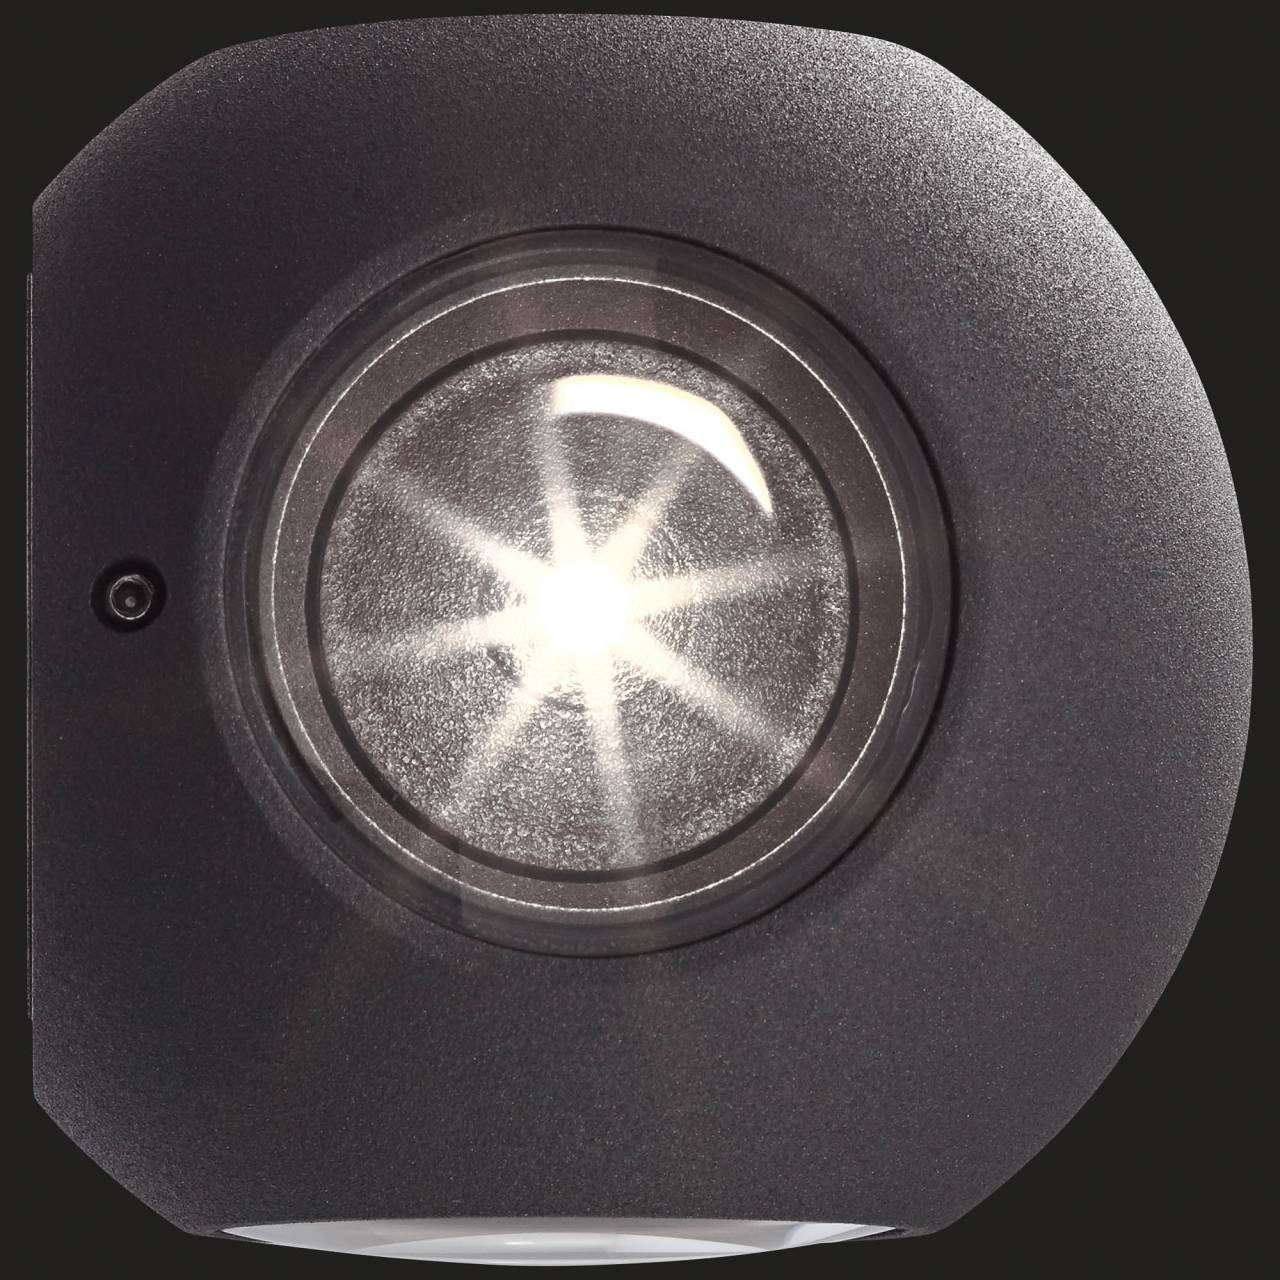 fest Ø LED AEG integriert, LED 3 W, 10 4 Warmweiß, cm, 720 anthrazit Außen-Wandleuchte lm, x Gus, Alu-Druckguss/Glas, IP54,